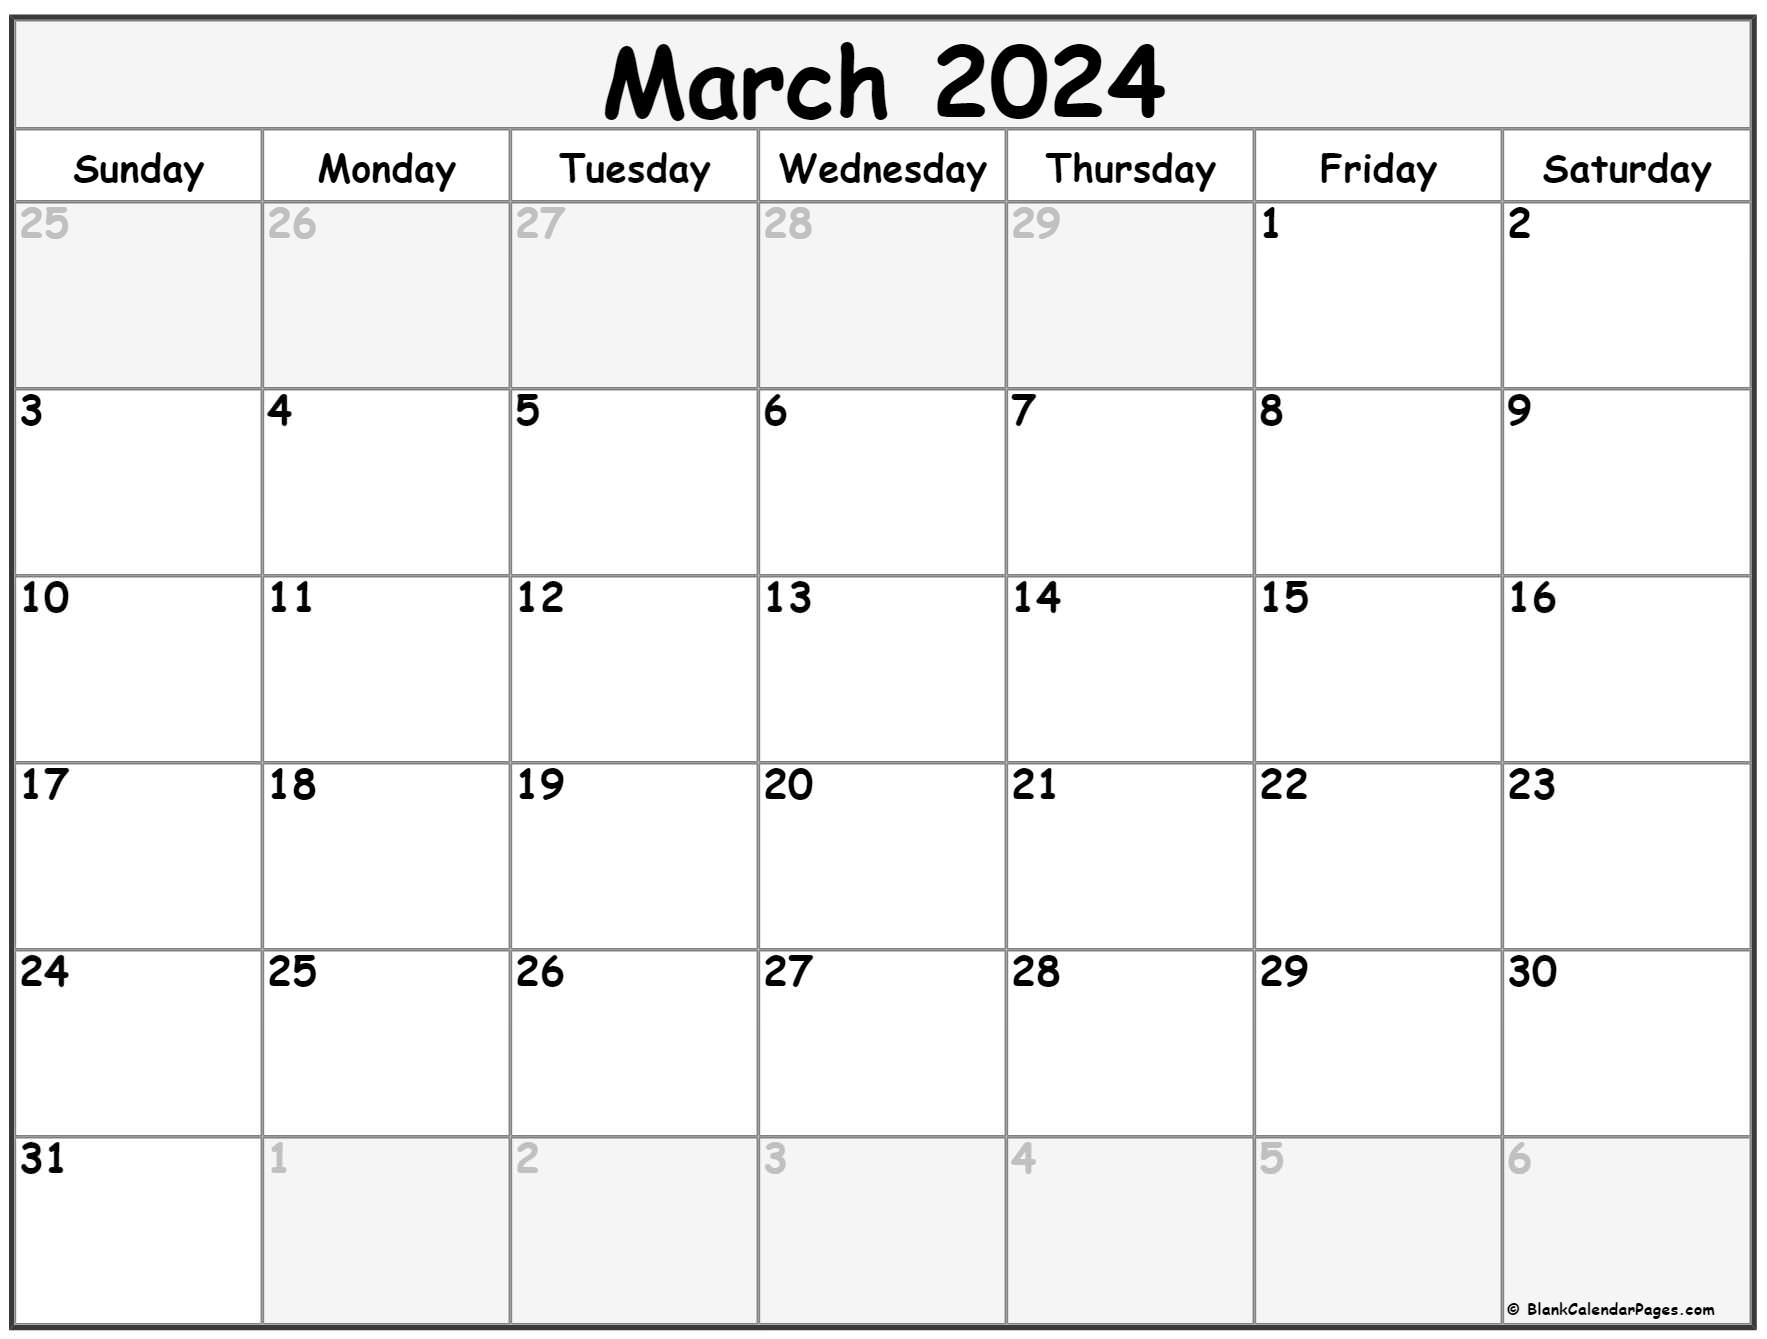 March 2024 New Orleans Filia Roselia